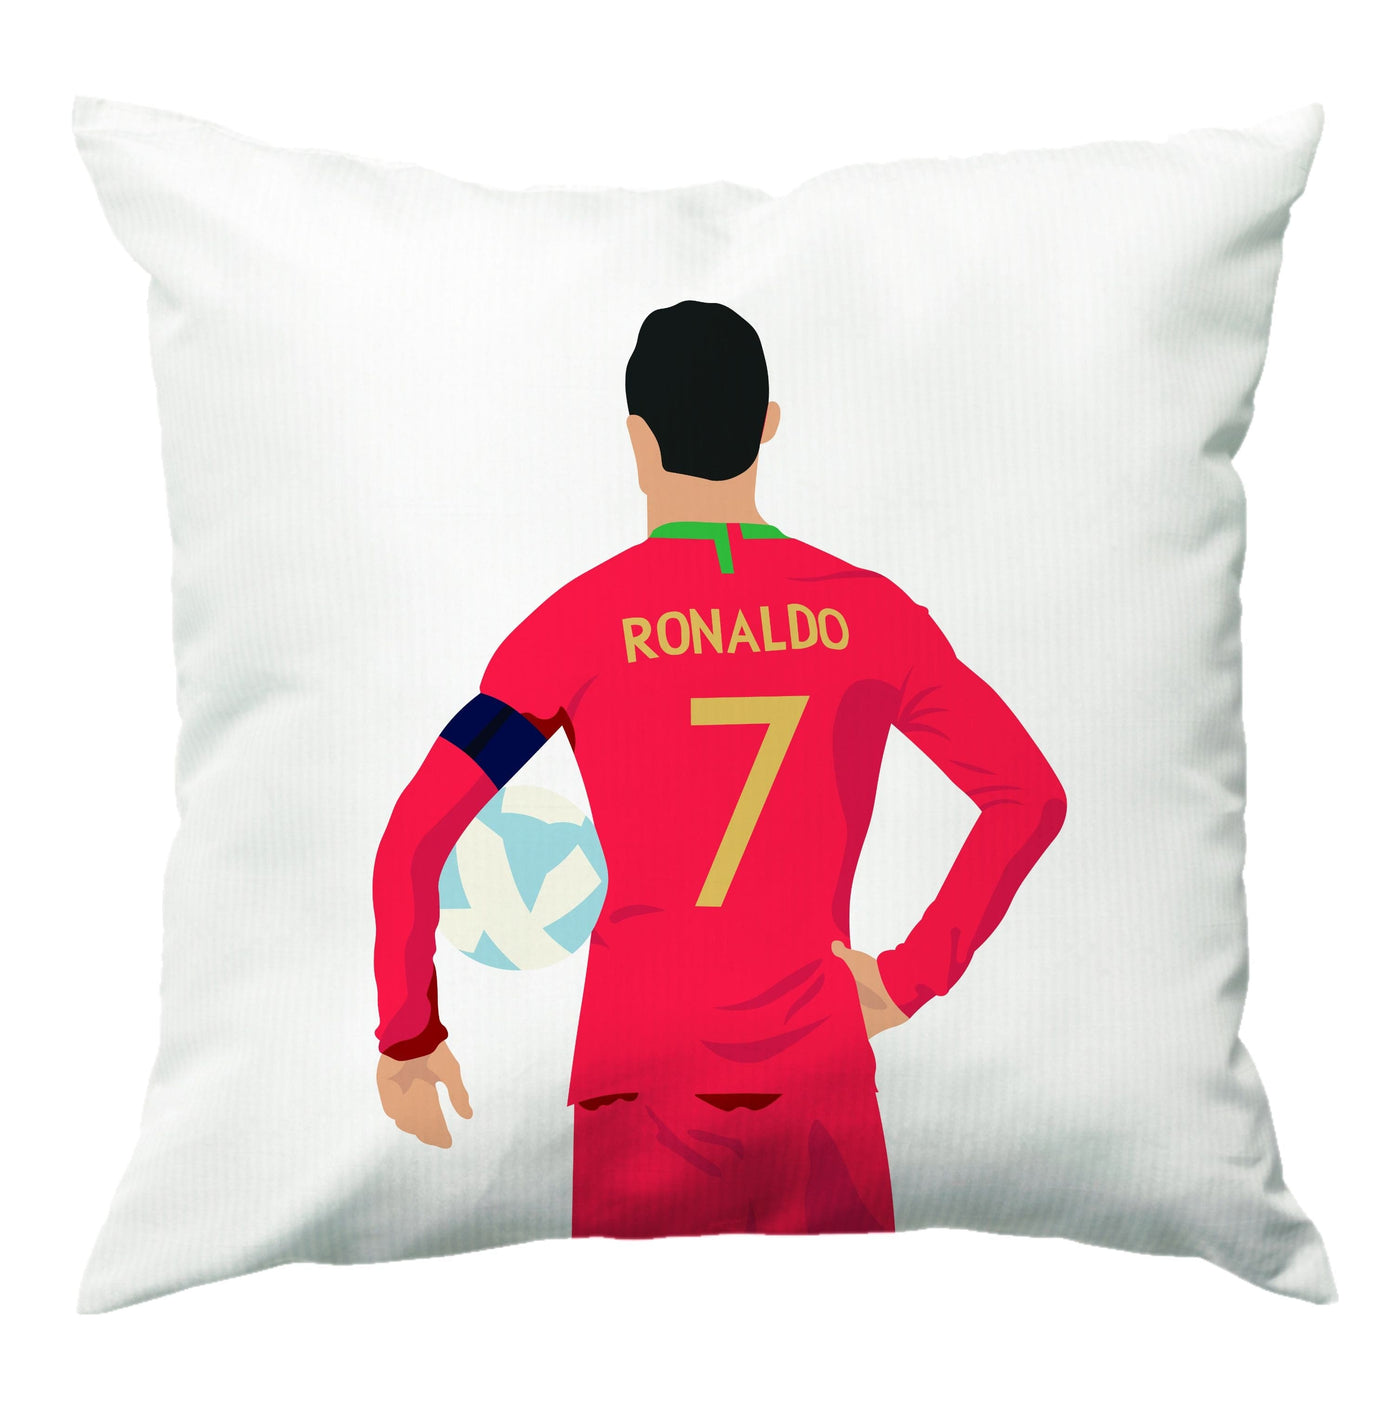 Ronaldo - Football Cushion